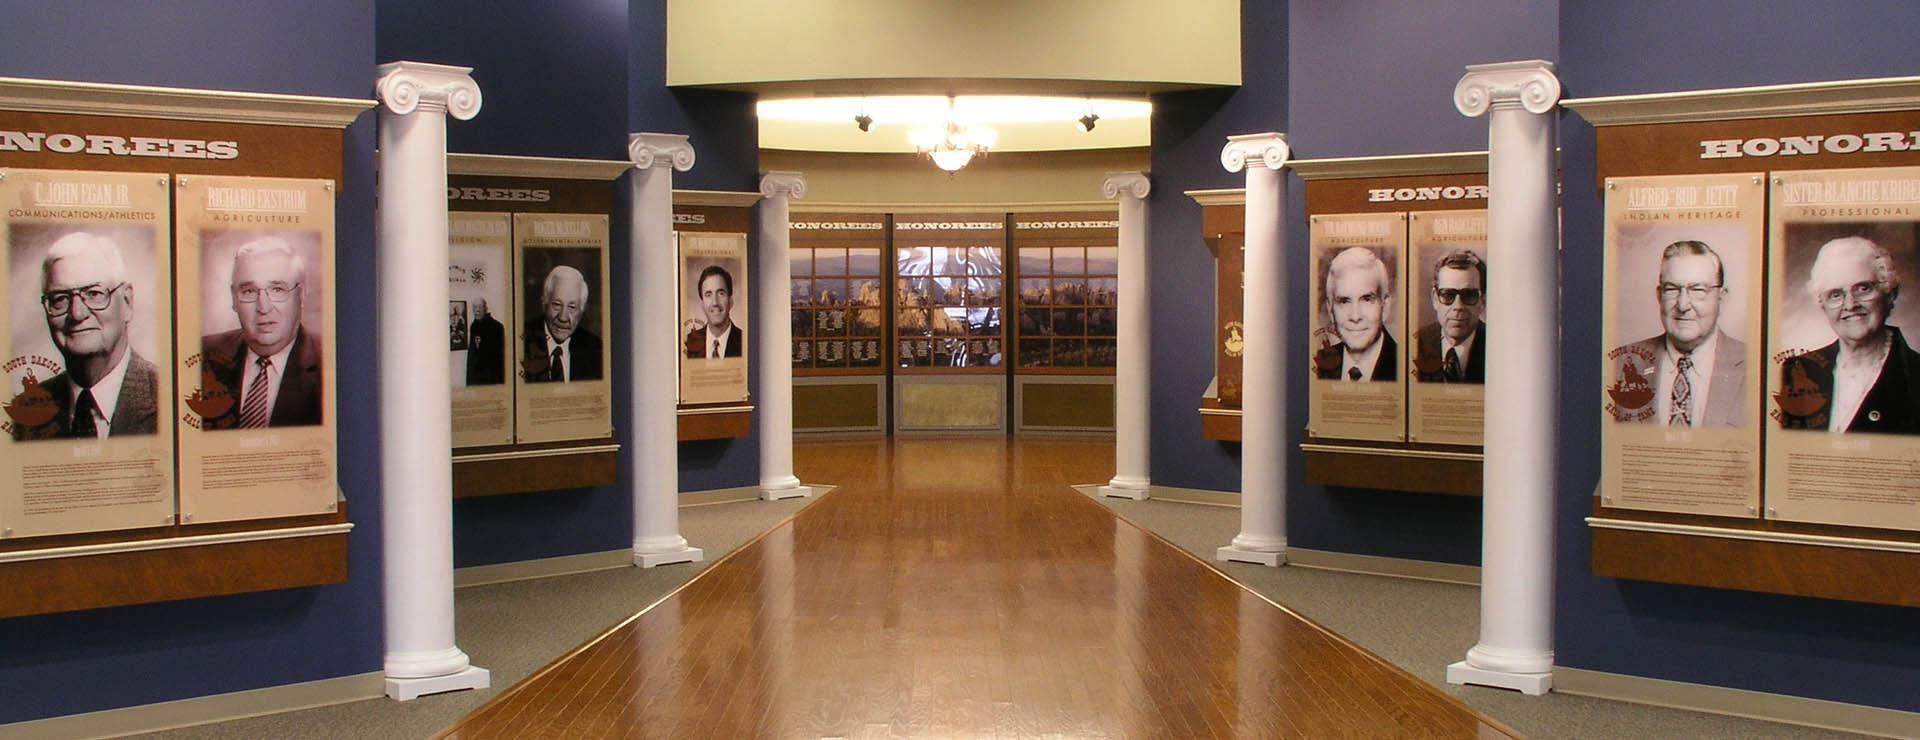 Interior photo of the South Dakota Hall of Fame.